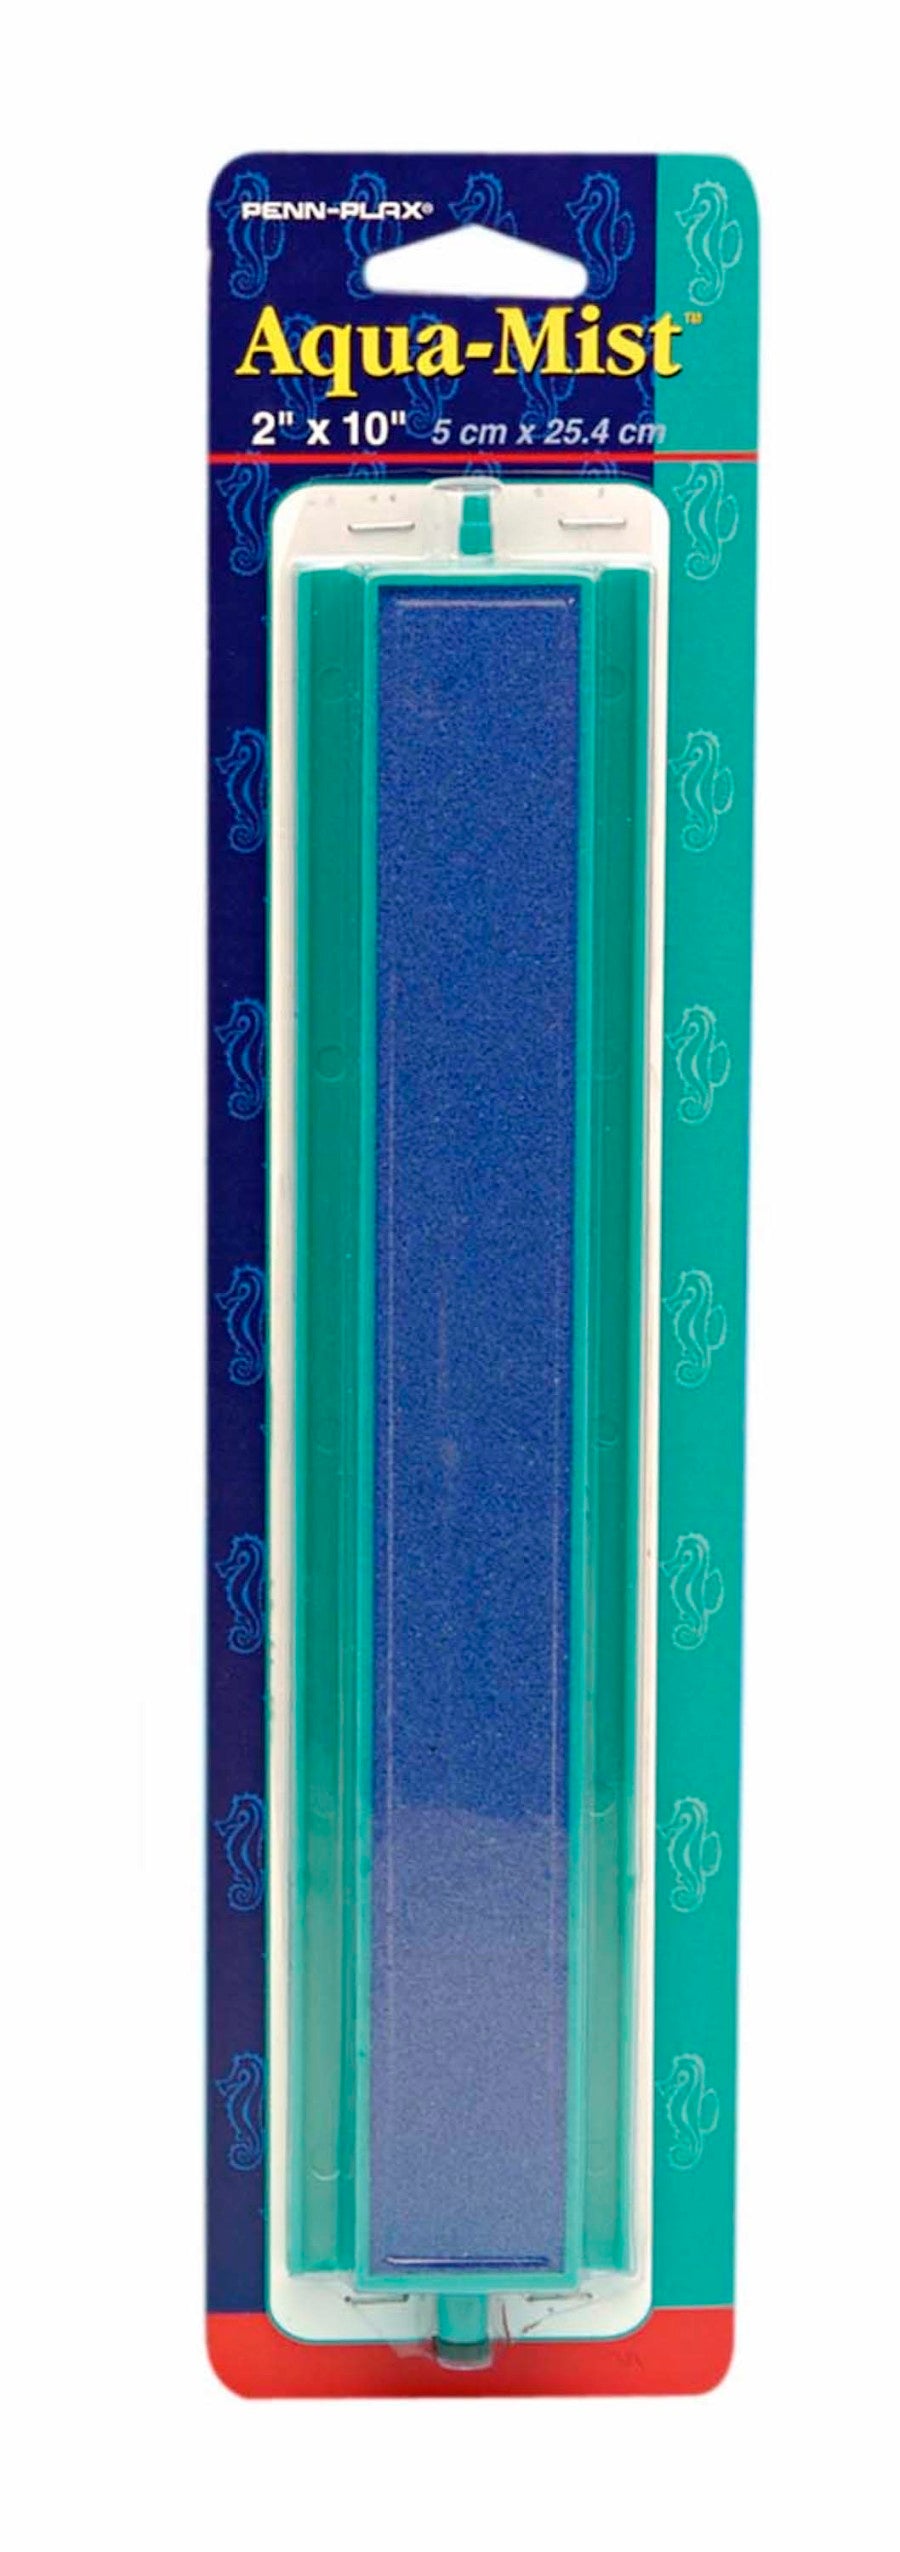 PennPlax AquaMist AddAStone Air Stone Green/Blue